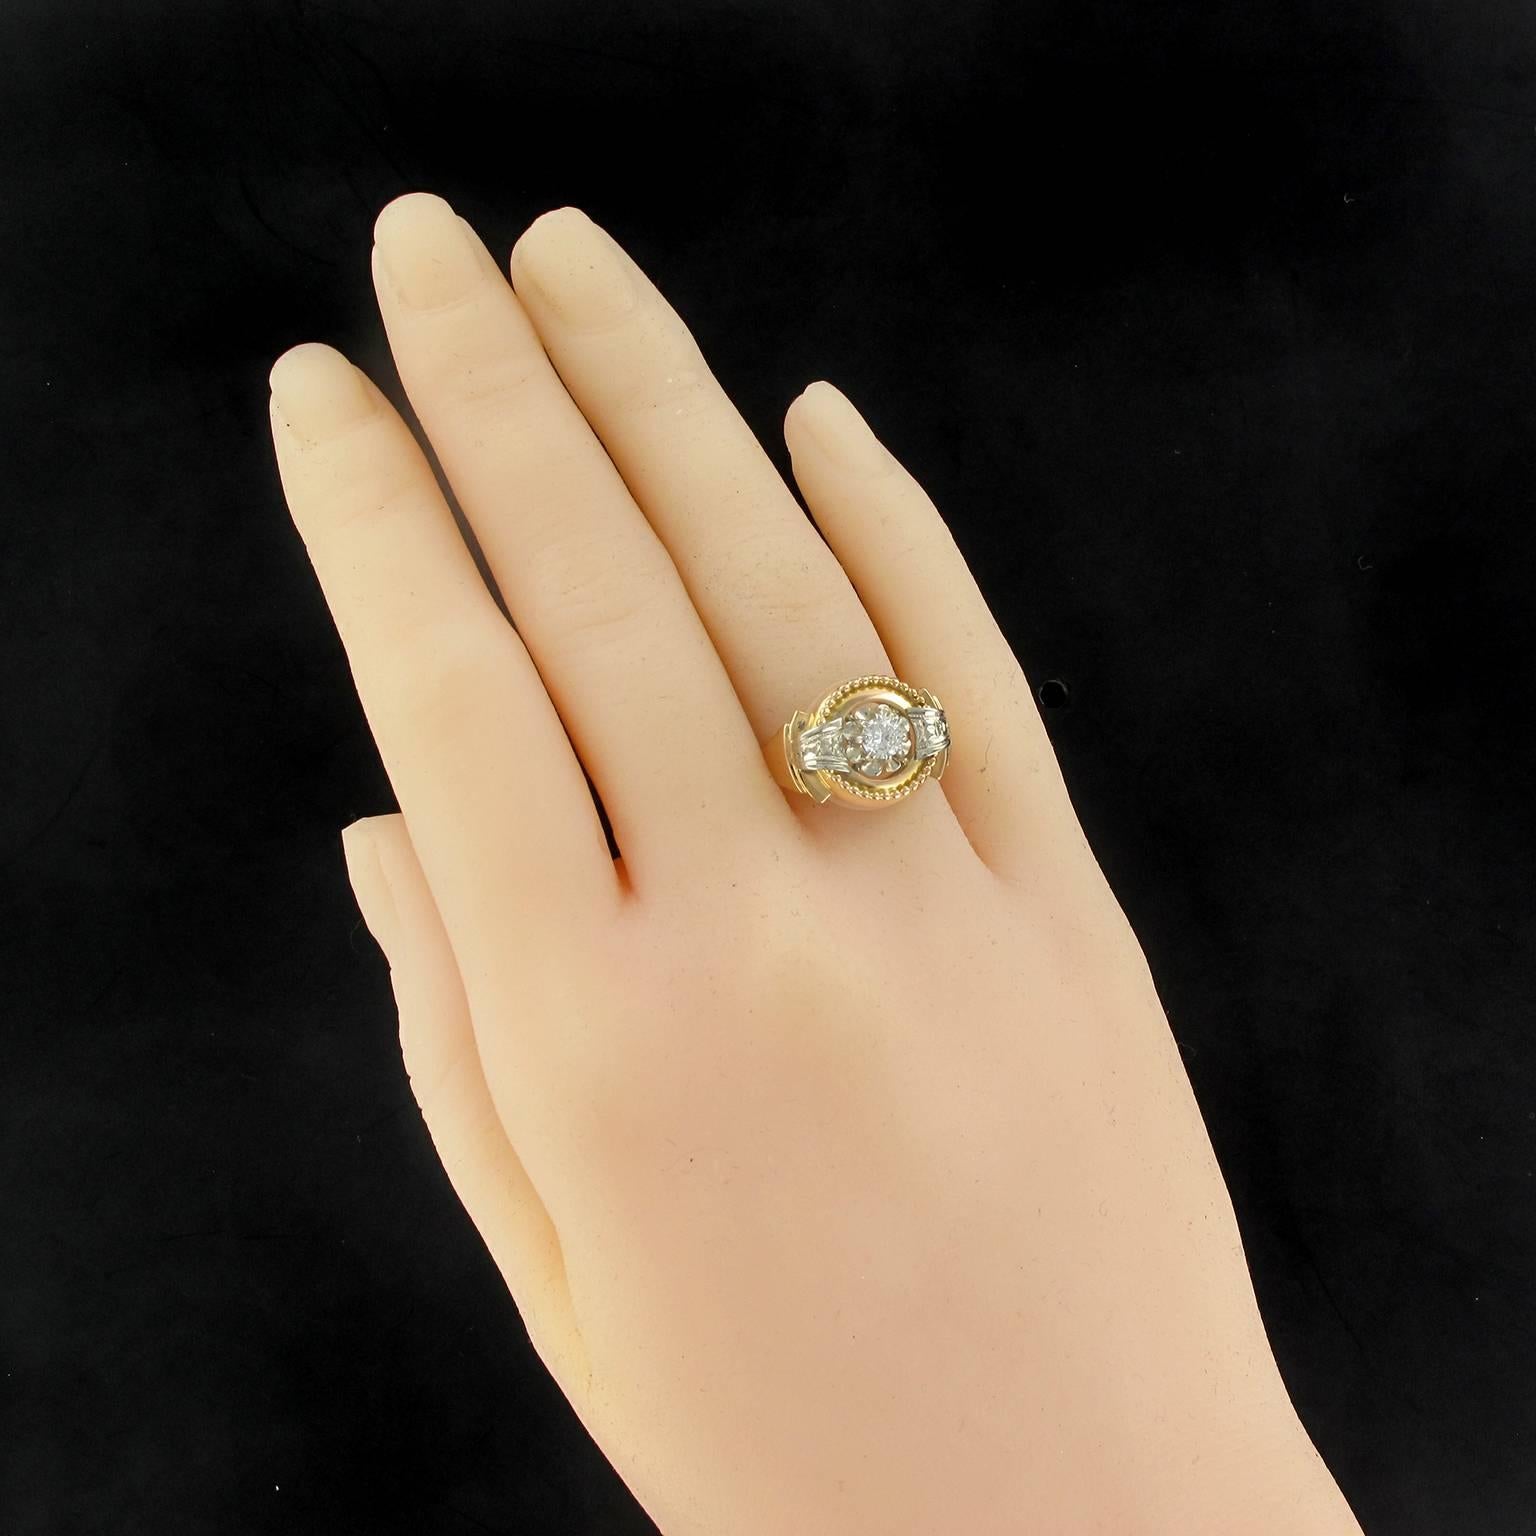 Retro French 1950s Yellow and White Gold Diamond Ring